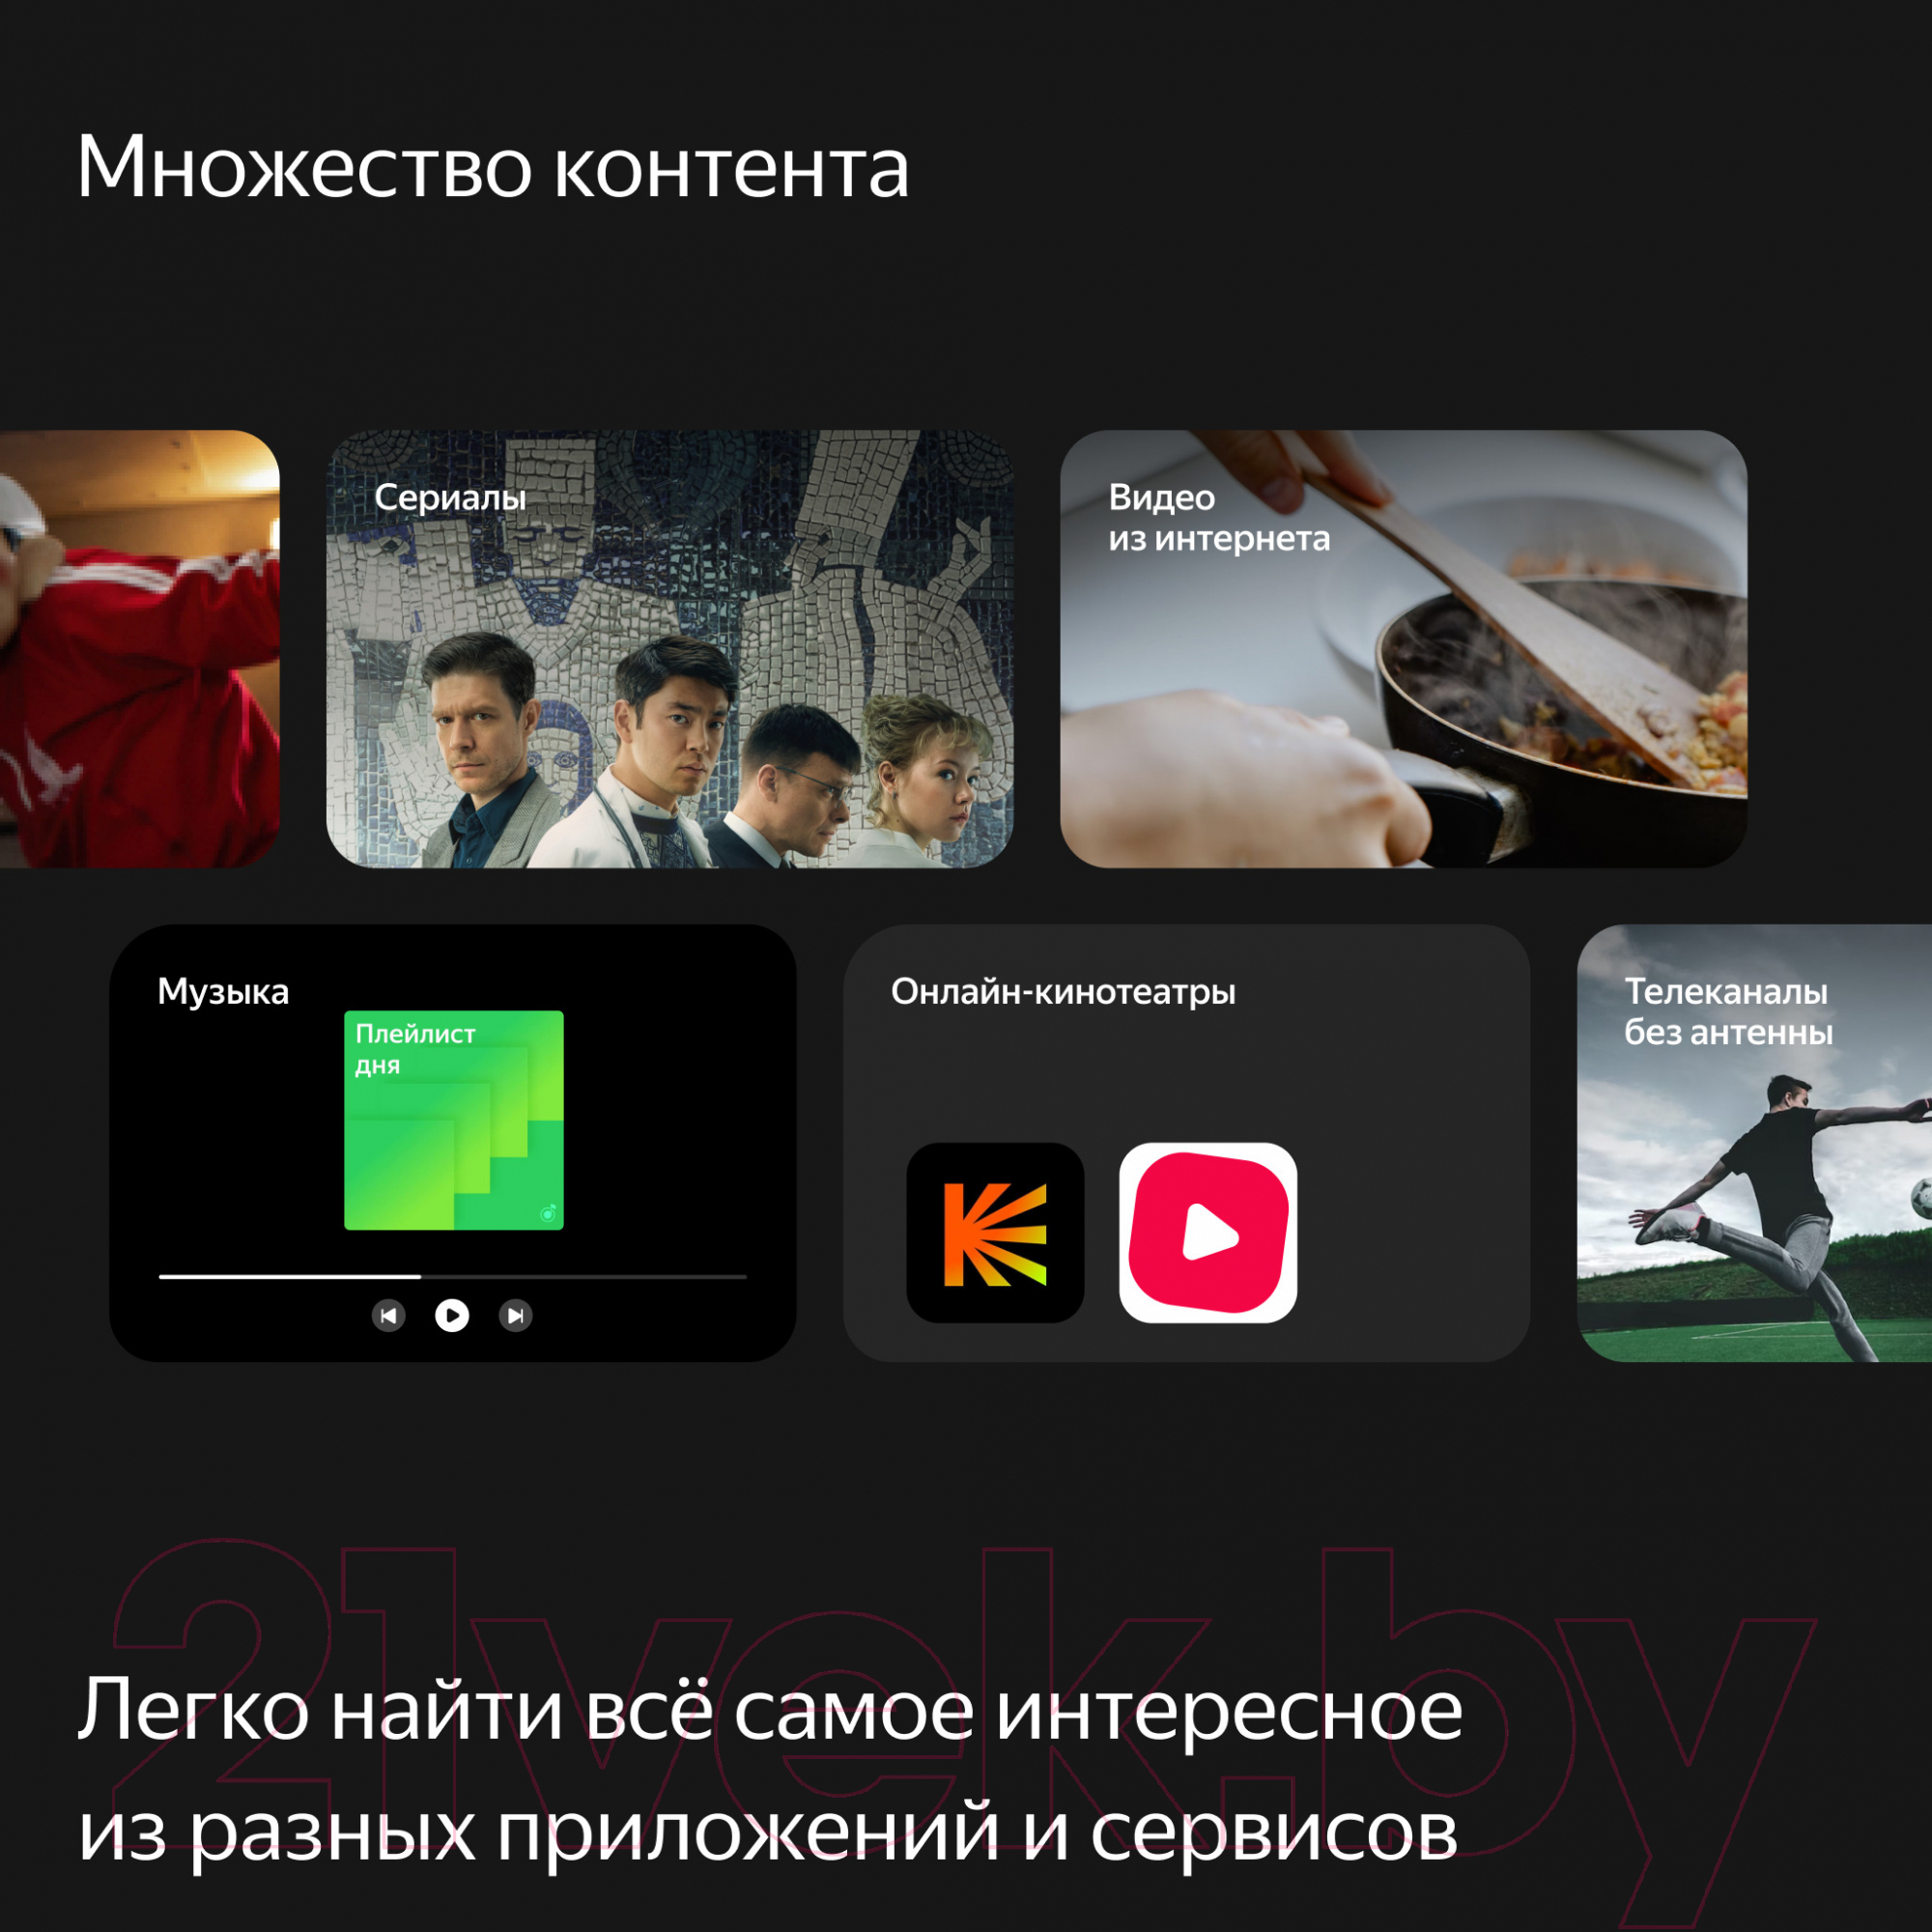 Телевизор Яндекс 55